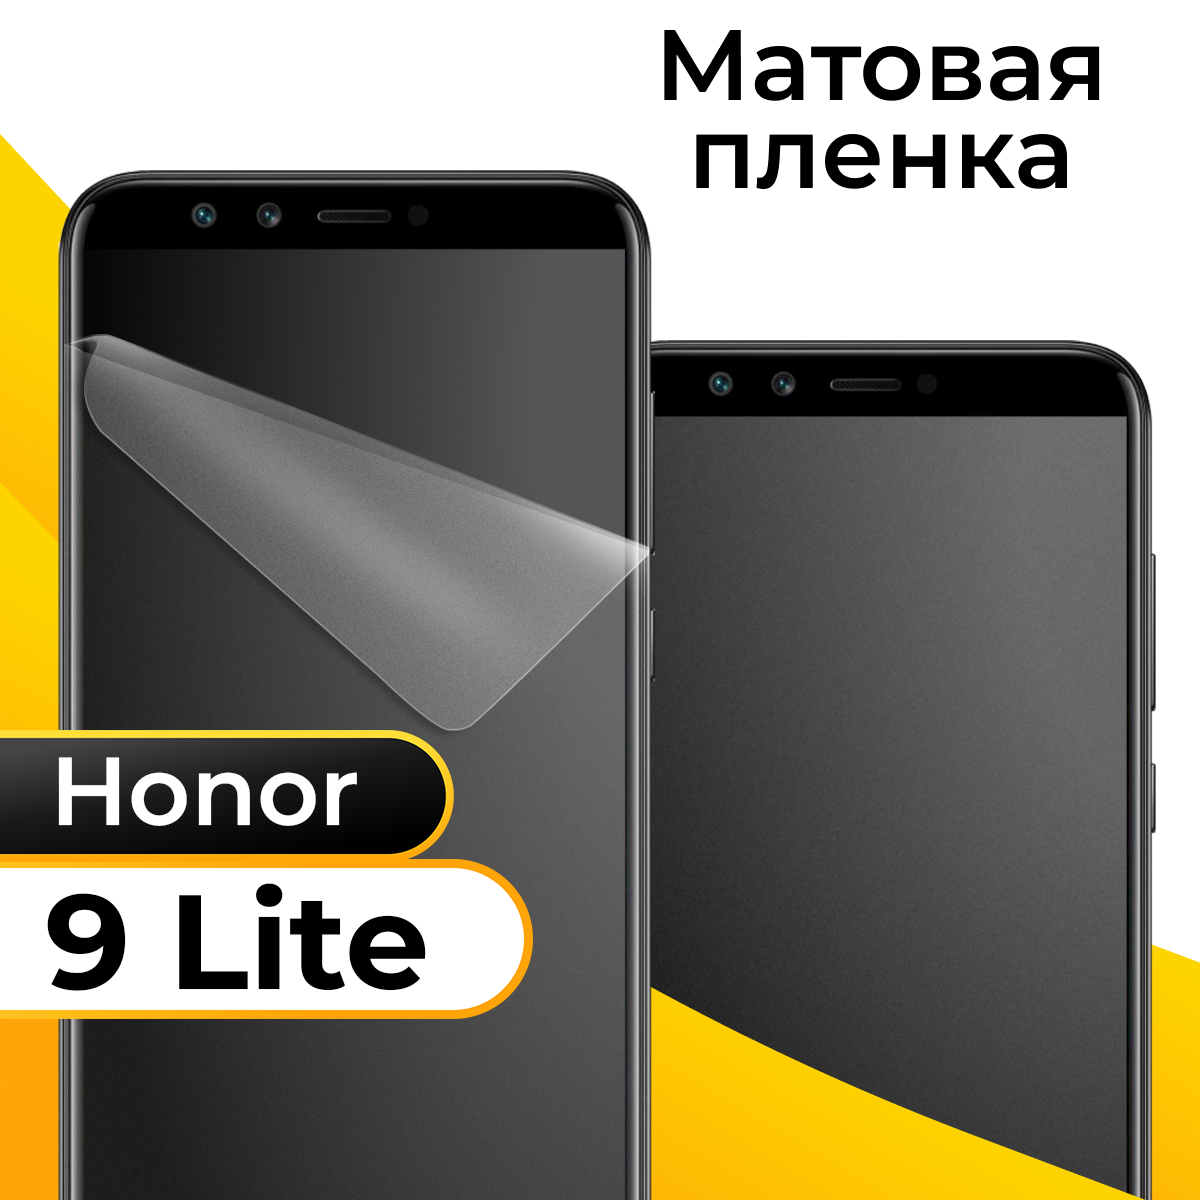 Комплект 2 шт. Матовая пленка для смартфона Huawei Honor 9 Lite / Защитная противоударная пленка на телефон Хуавей Хонор 9 Лайт / Гидрогелевая пленка